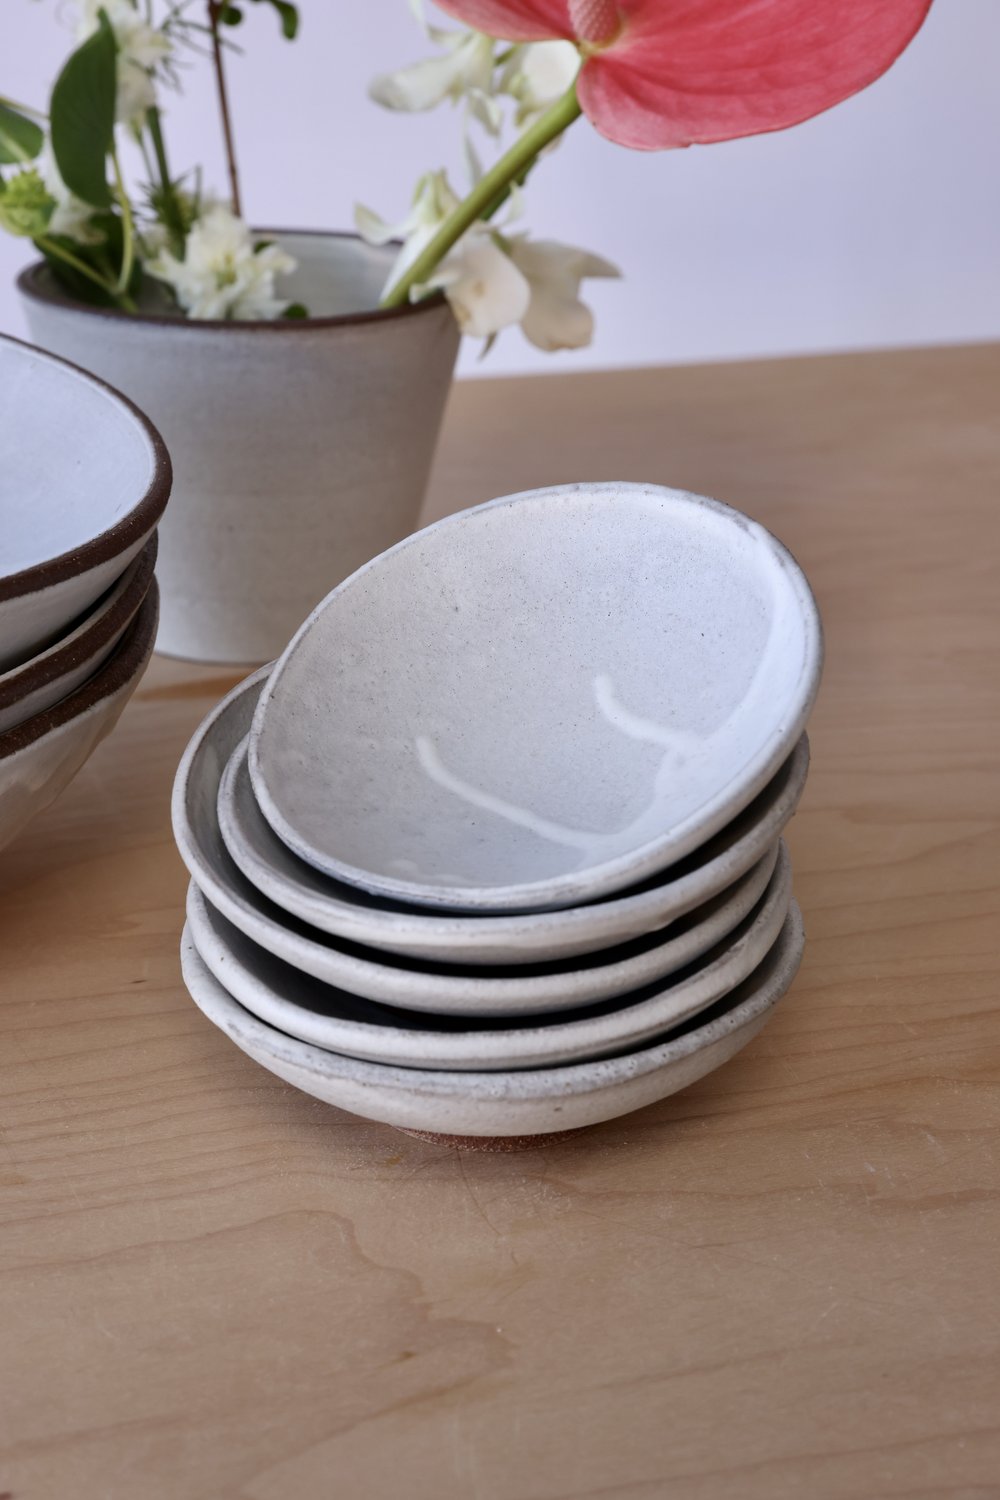 Ceramic Kitchen Plates Tableware